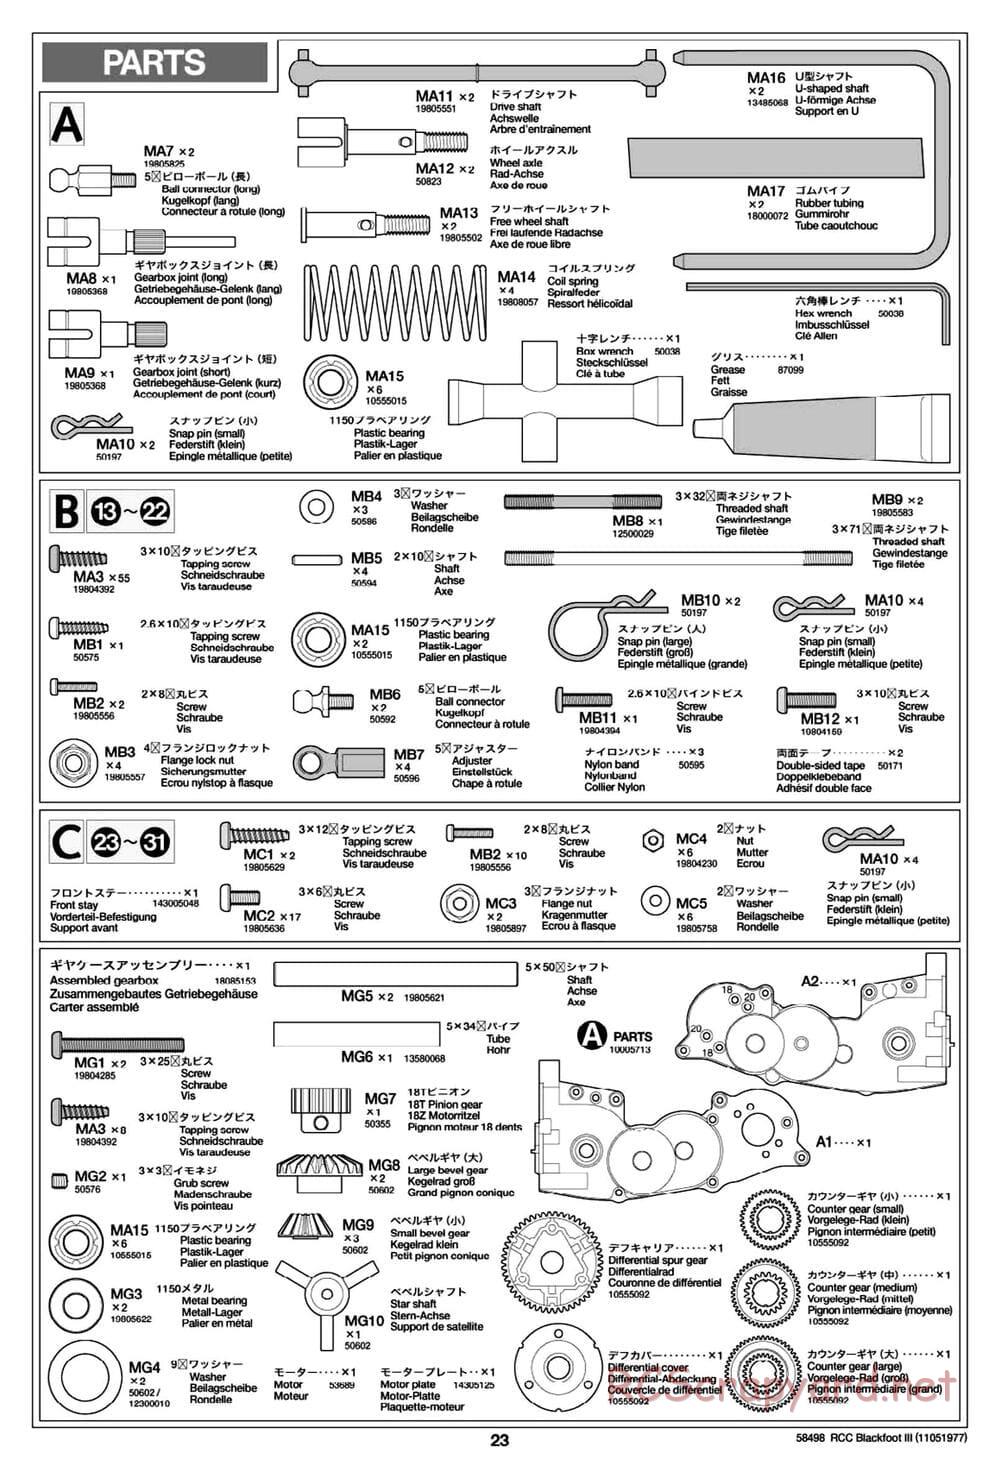 Tamiya - Blackfoot III - WT-01 Chassis - Manual - Page 23